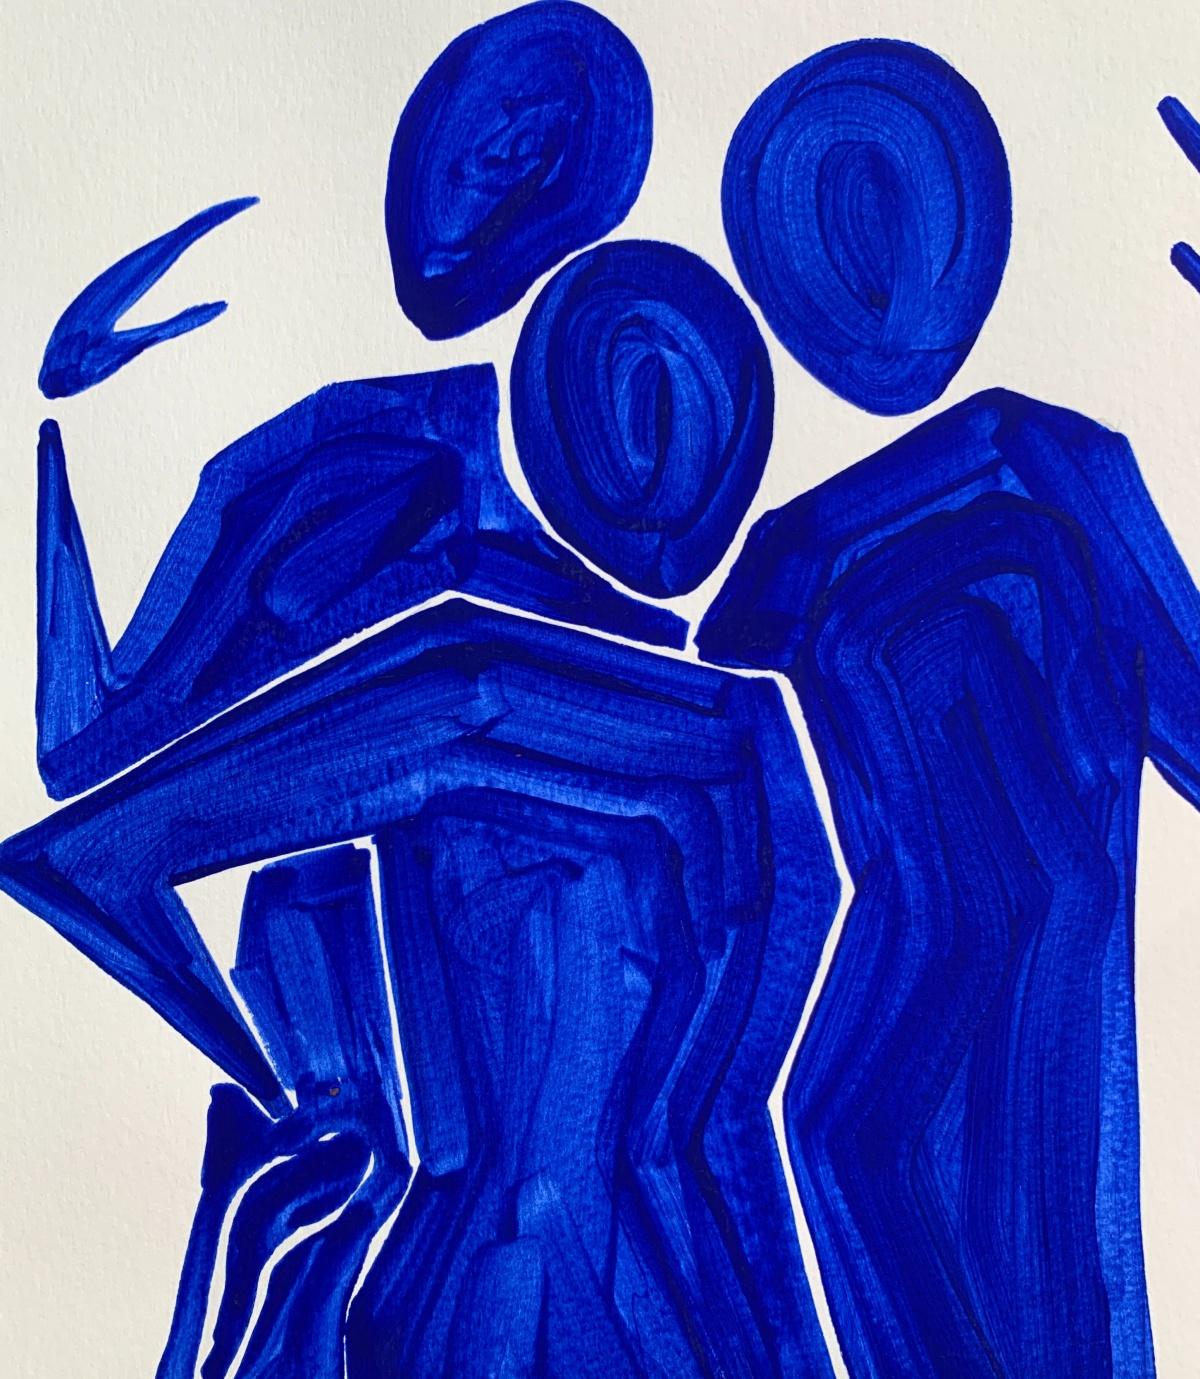 Three blue figures - Figurative Painting on Paper, Minimalist, Colorful, Vibrant 2